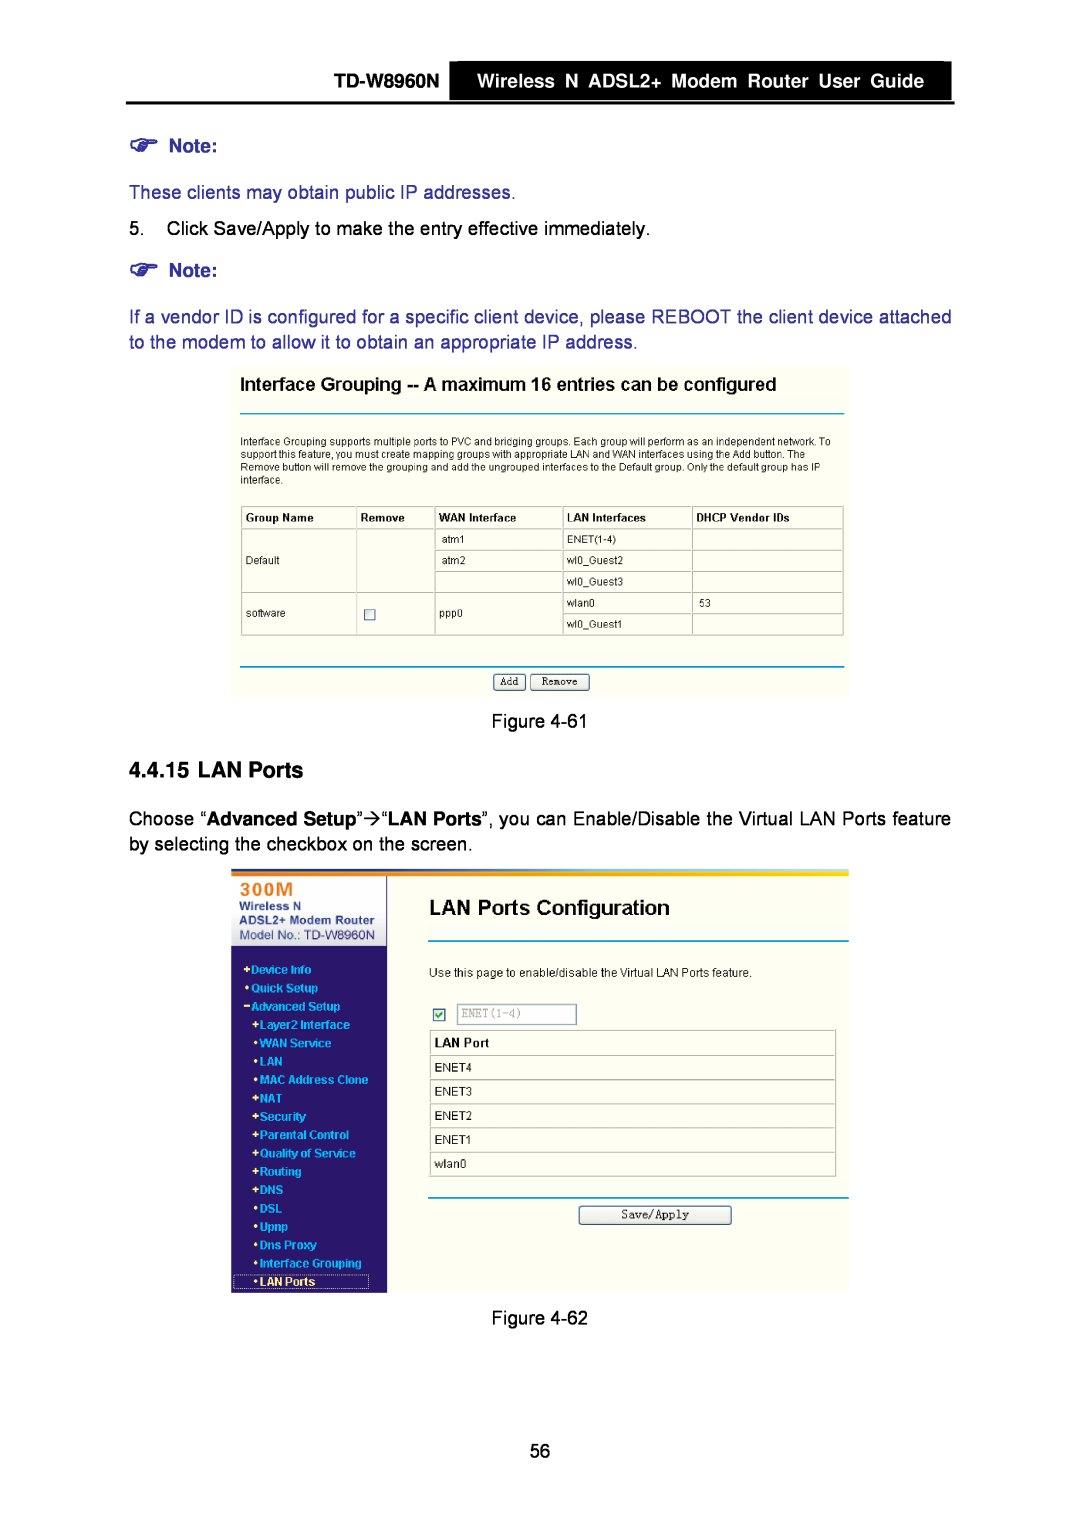 TP-Link manual LAN Ports, TD-W8960N Wireless N ADSL2+ Modem Router User Guide 